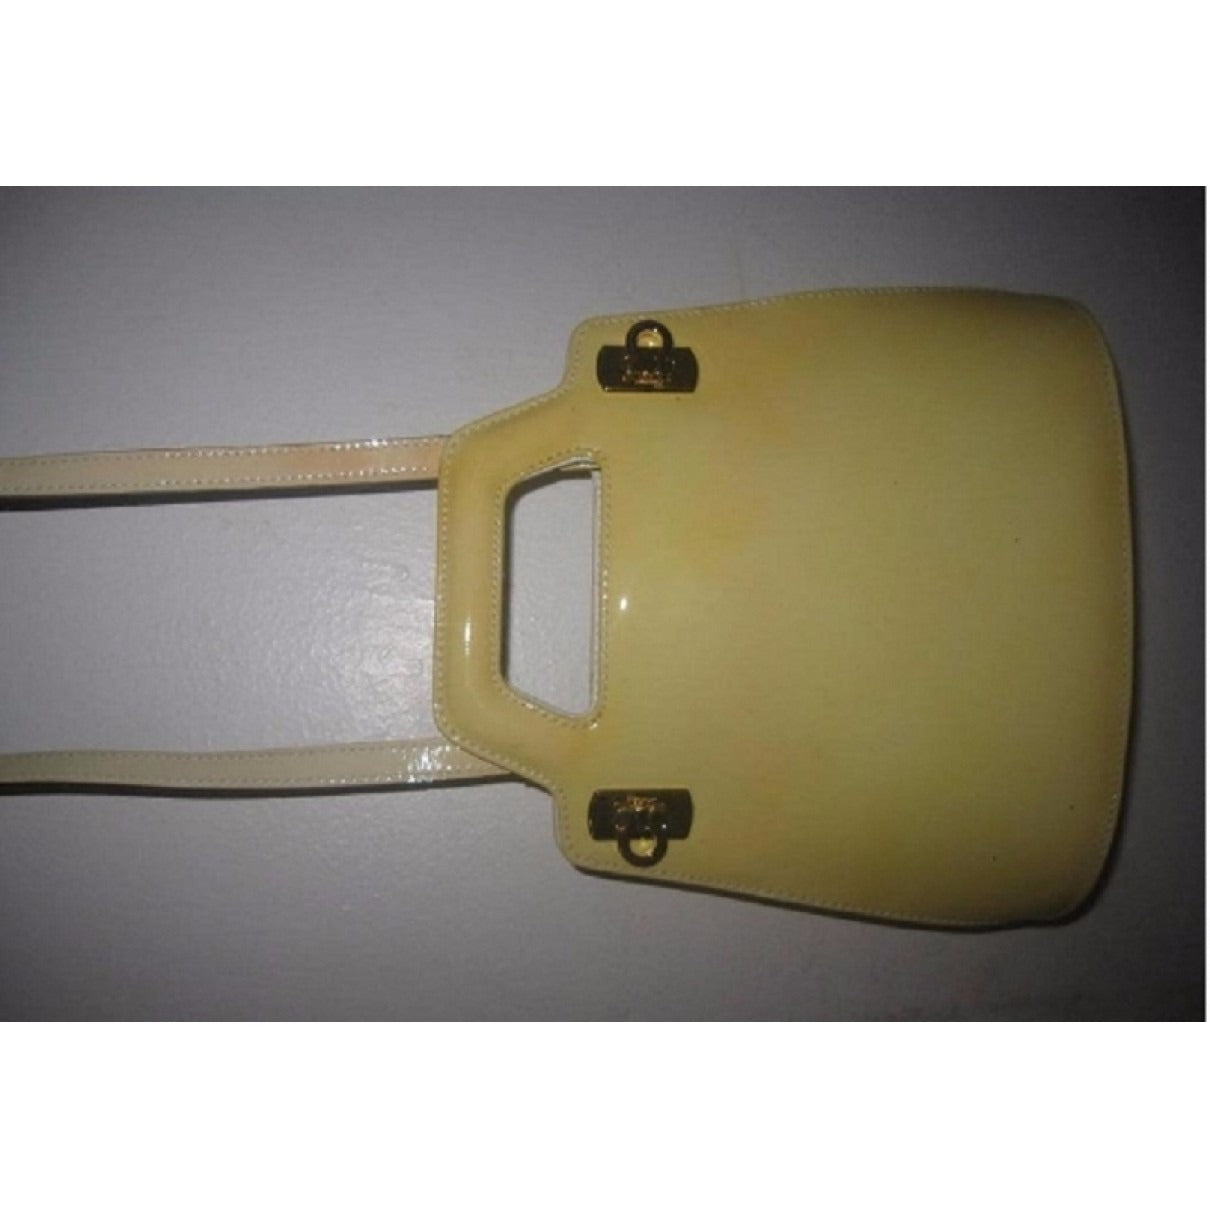 Ferragamo yellow patent leather two-way handbag- RE-RELEASED!